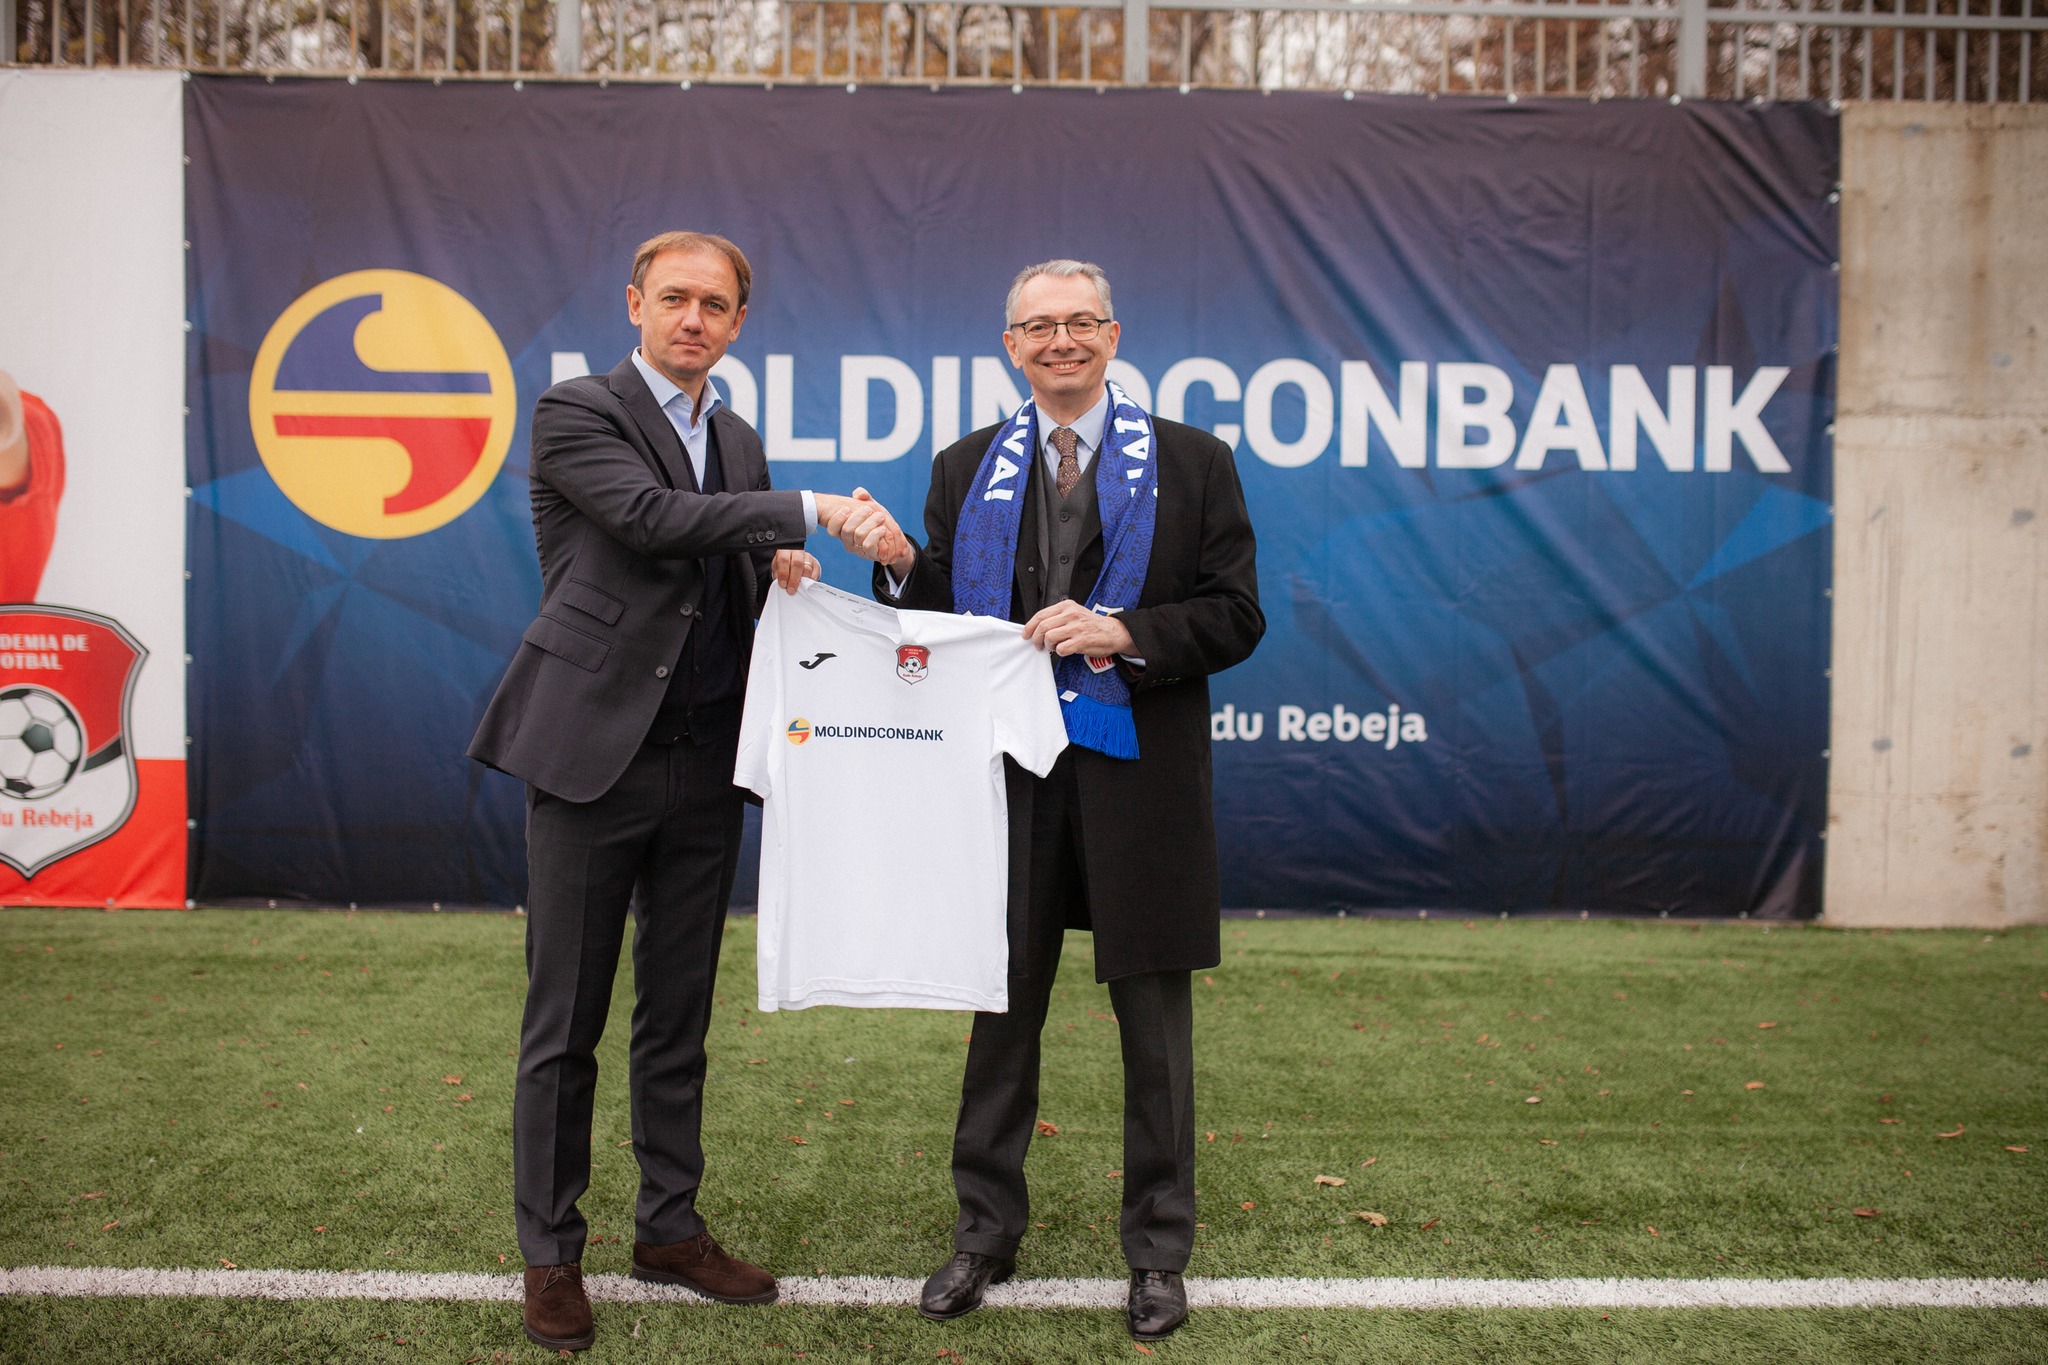 Financial support for “Radu Rebeja” Football Academy – Moldindconbank